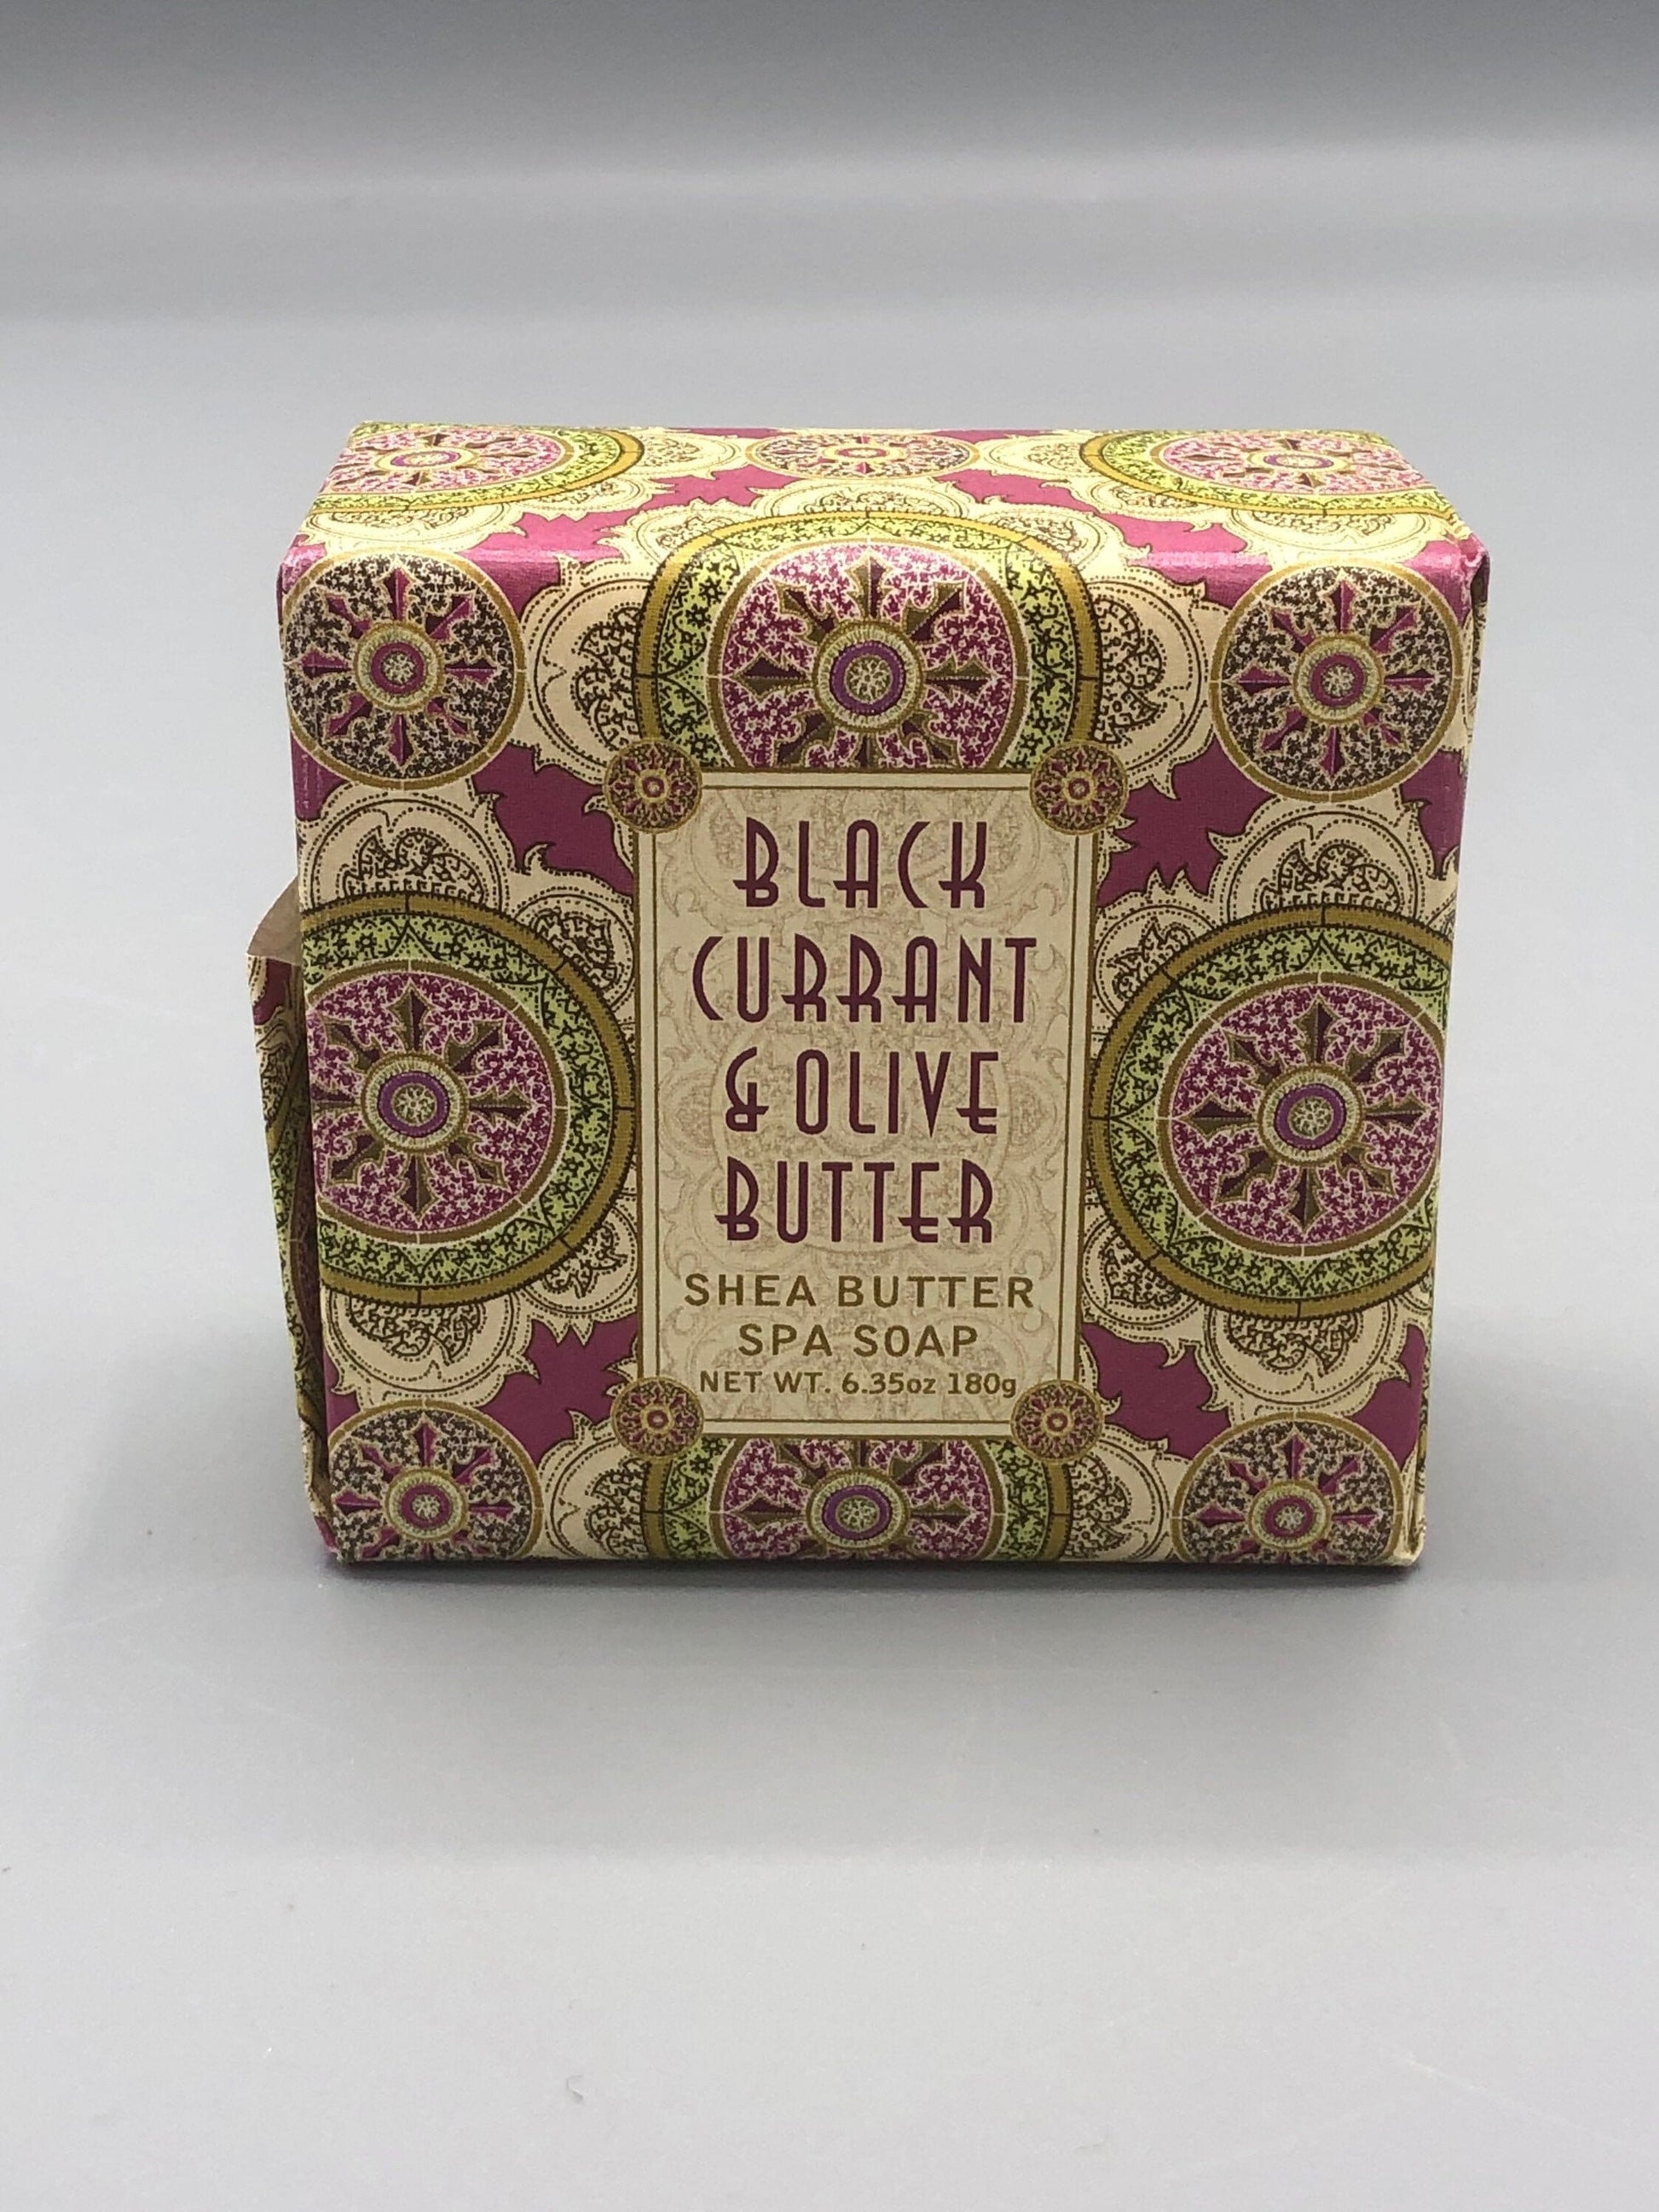 Black Currant & Olive Butter spa soap 6.35oz